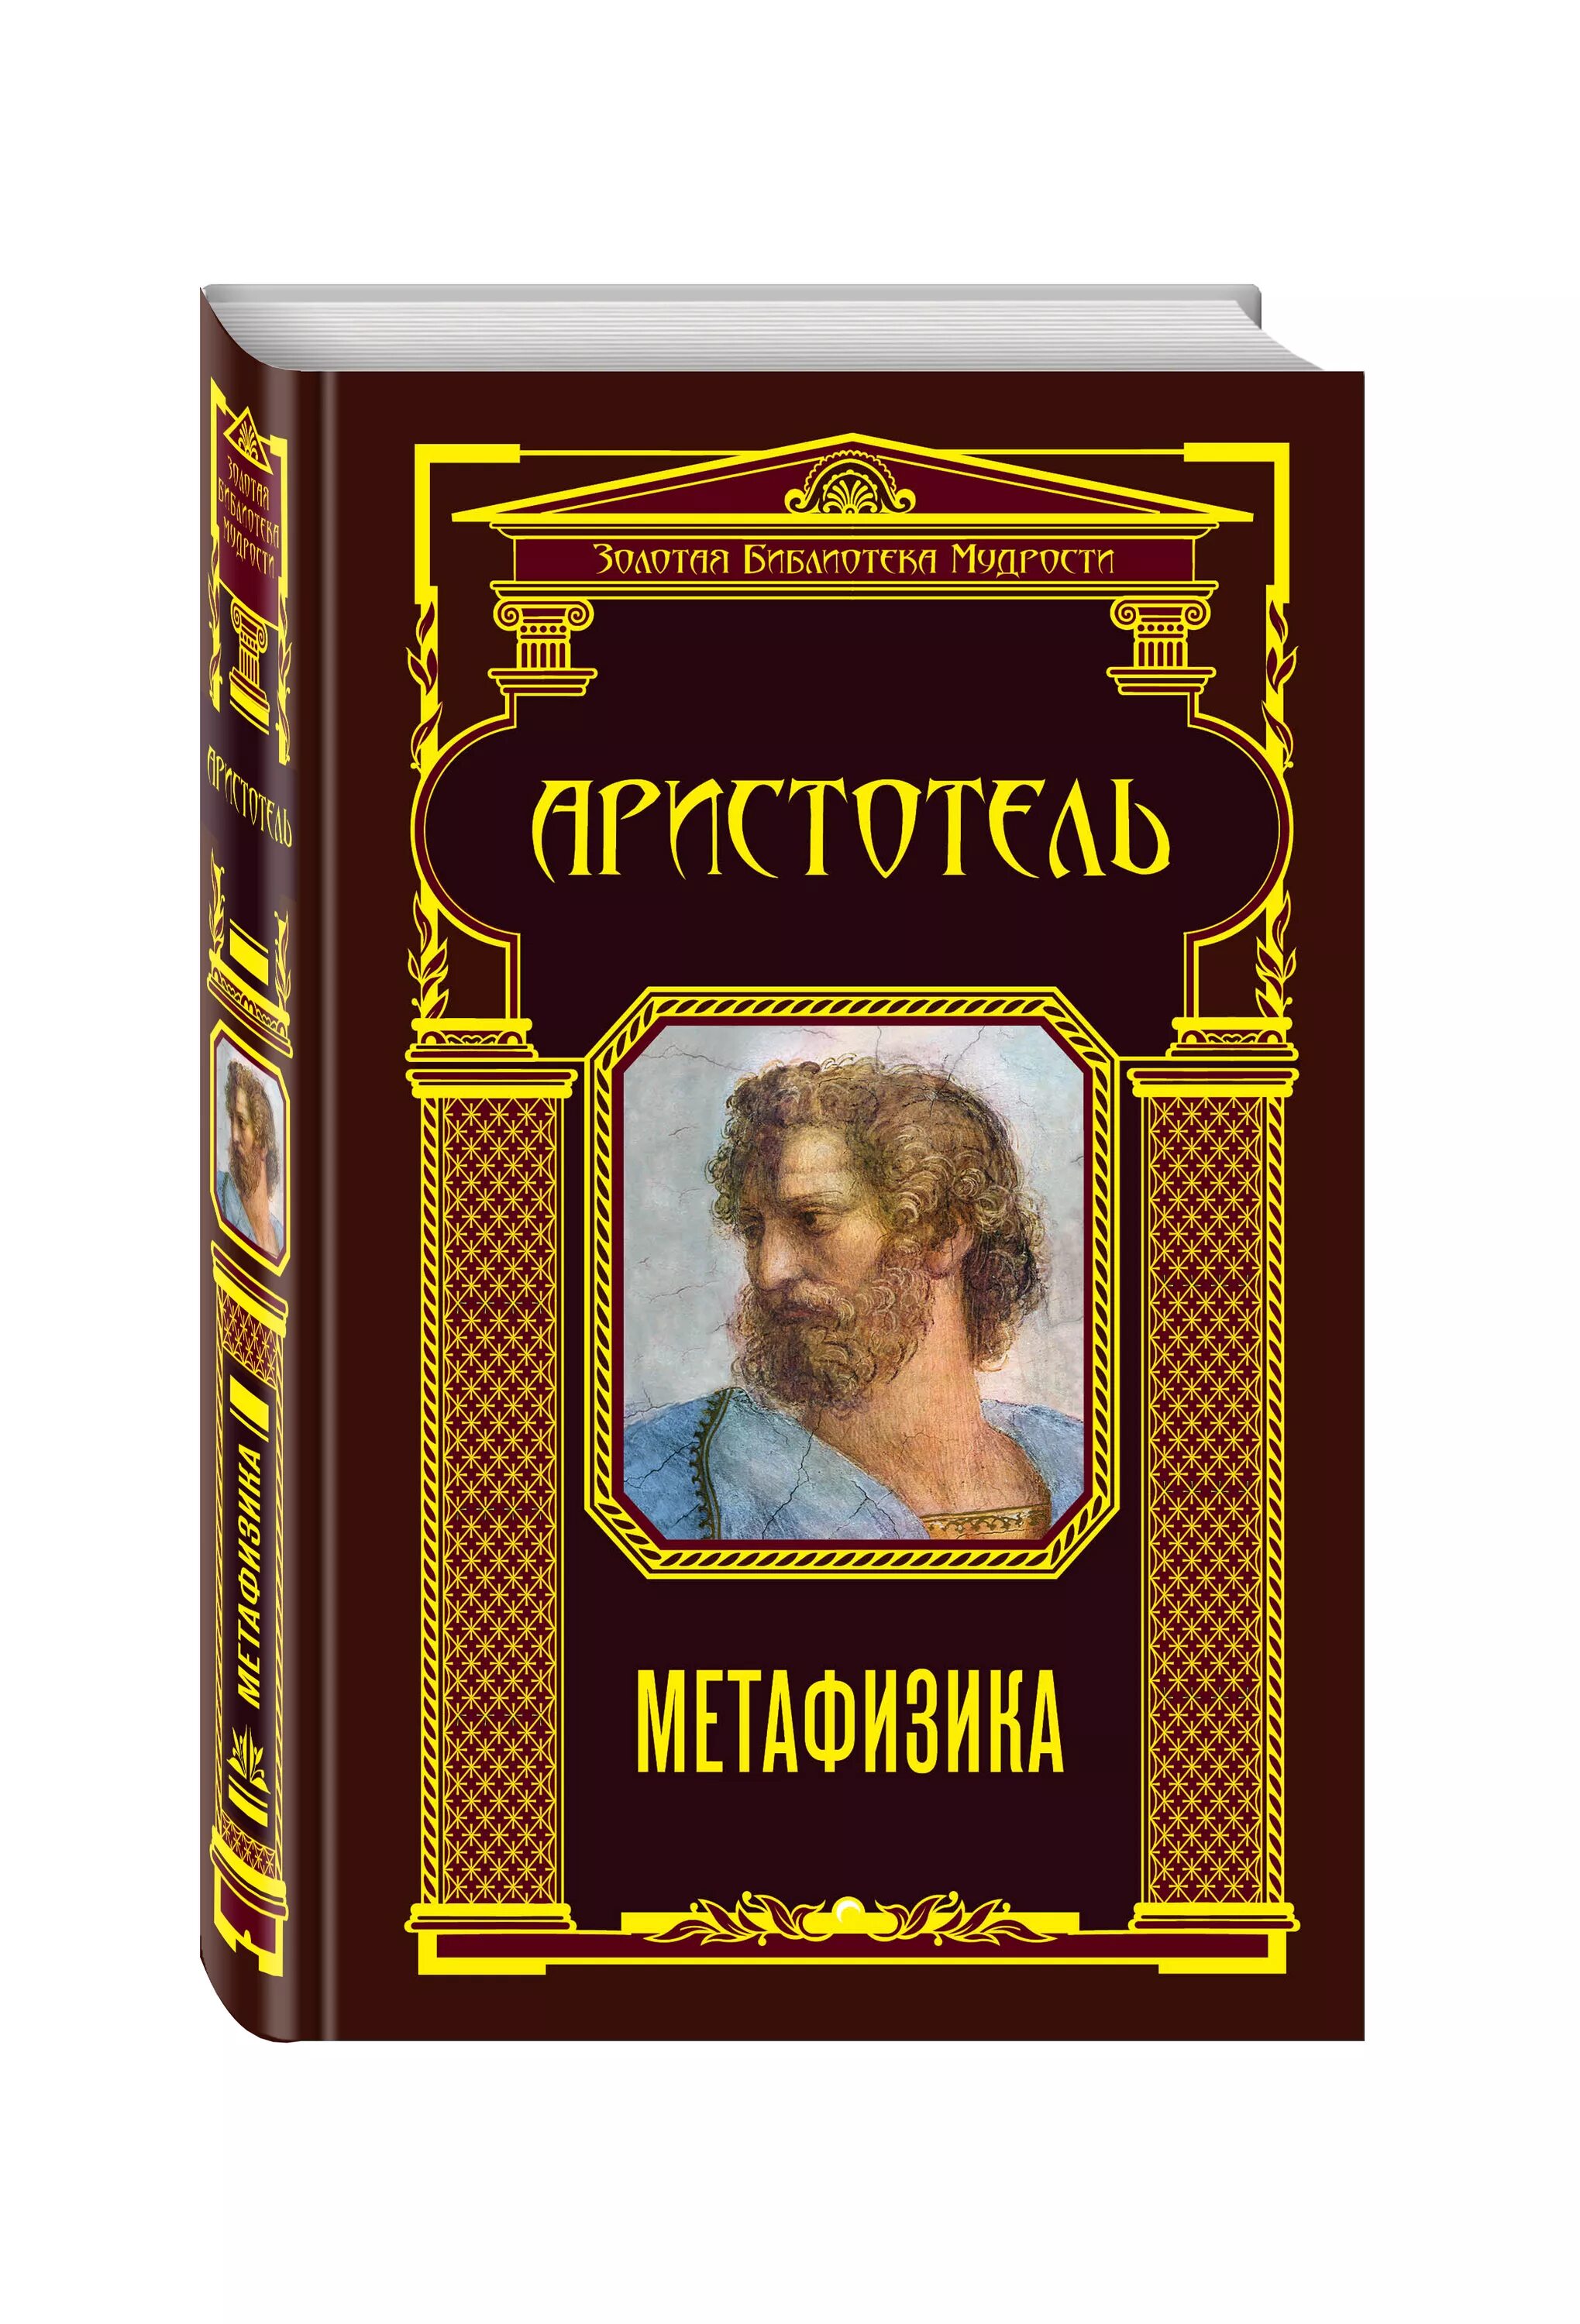 Метафизика ( Аристотель ). Аристотель книги. Метафизика книга. Трактат о метафизике Аристотеля. Аристотель книга 1